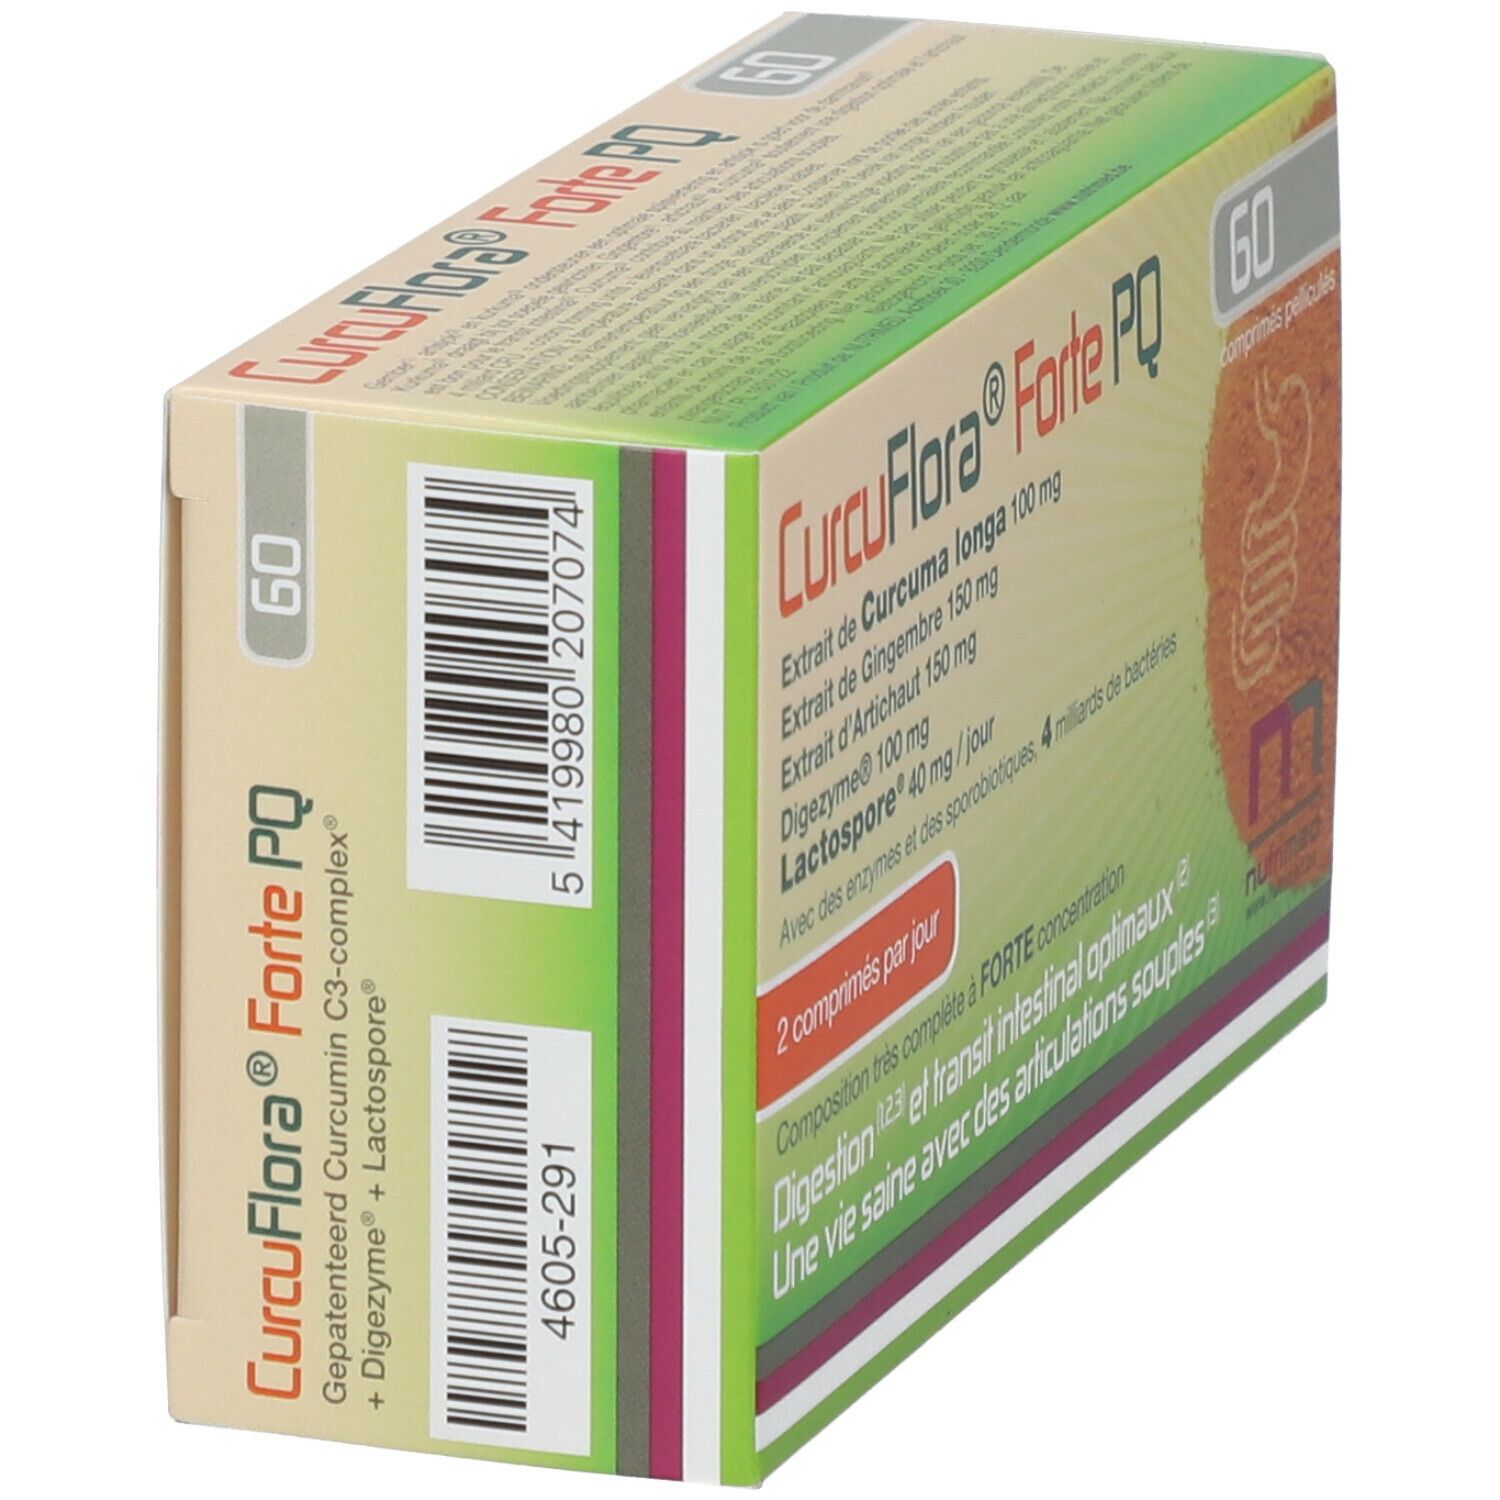 Nutrimed CurcuFlora® Forte PQ